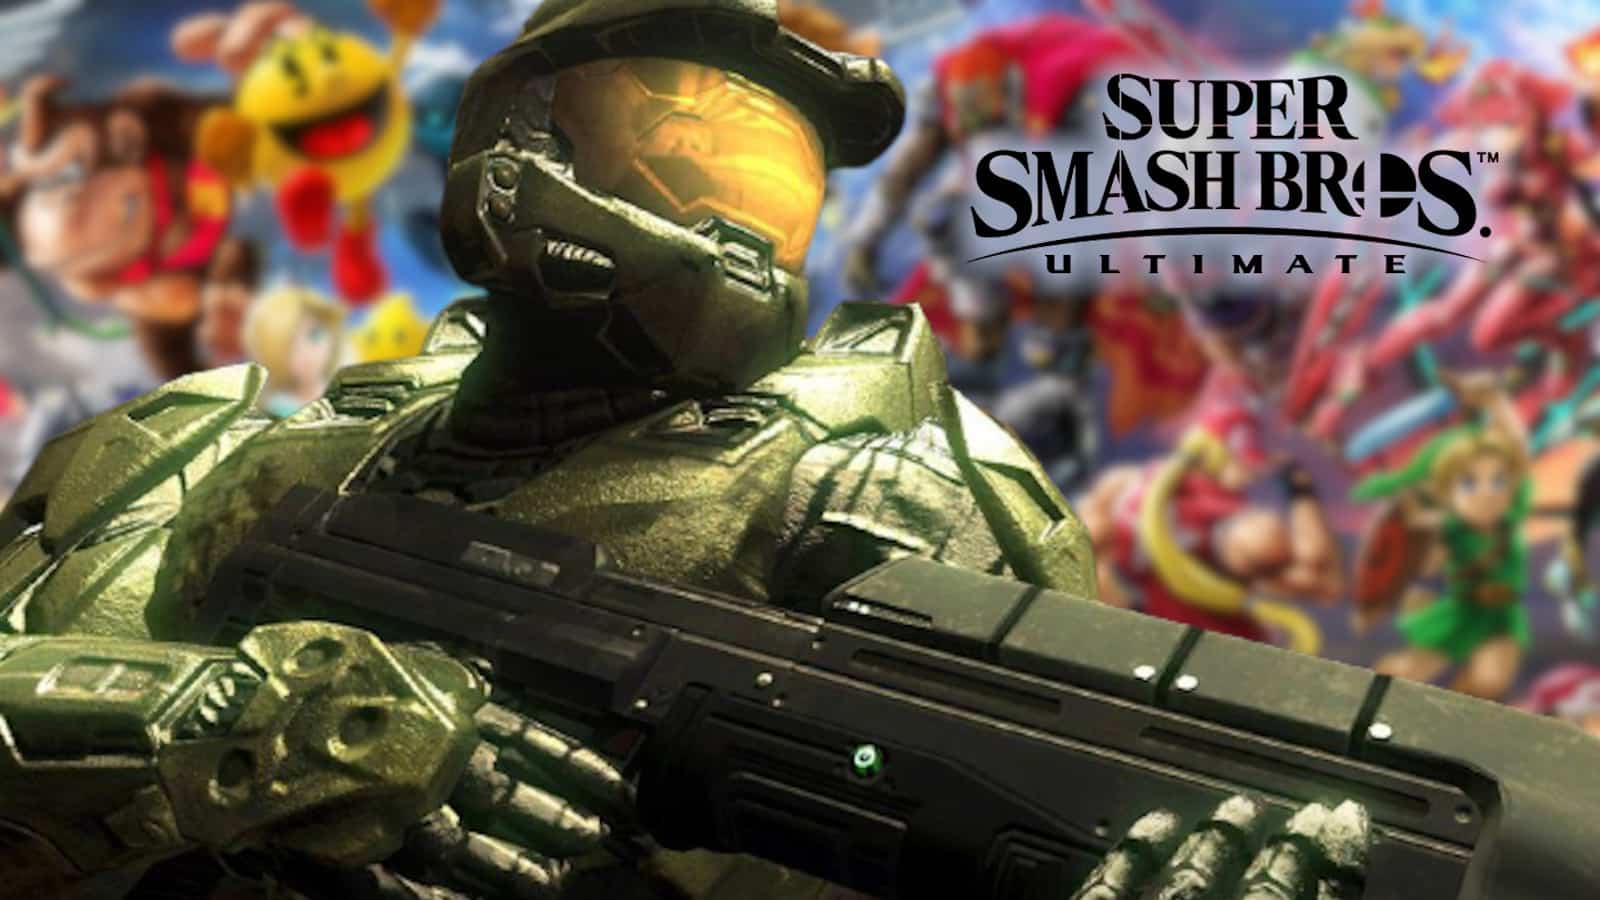 Halo devs still want Nintendo to add Master Chief to Smash